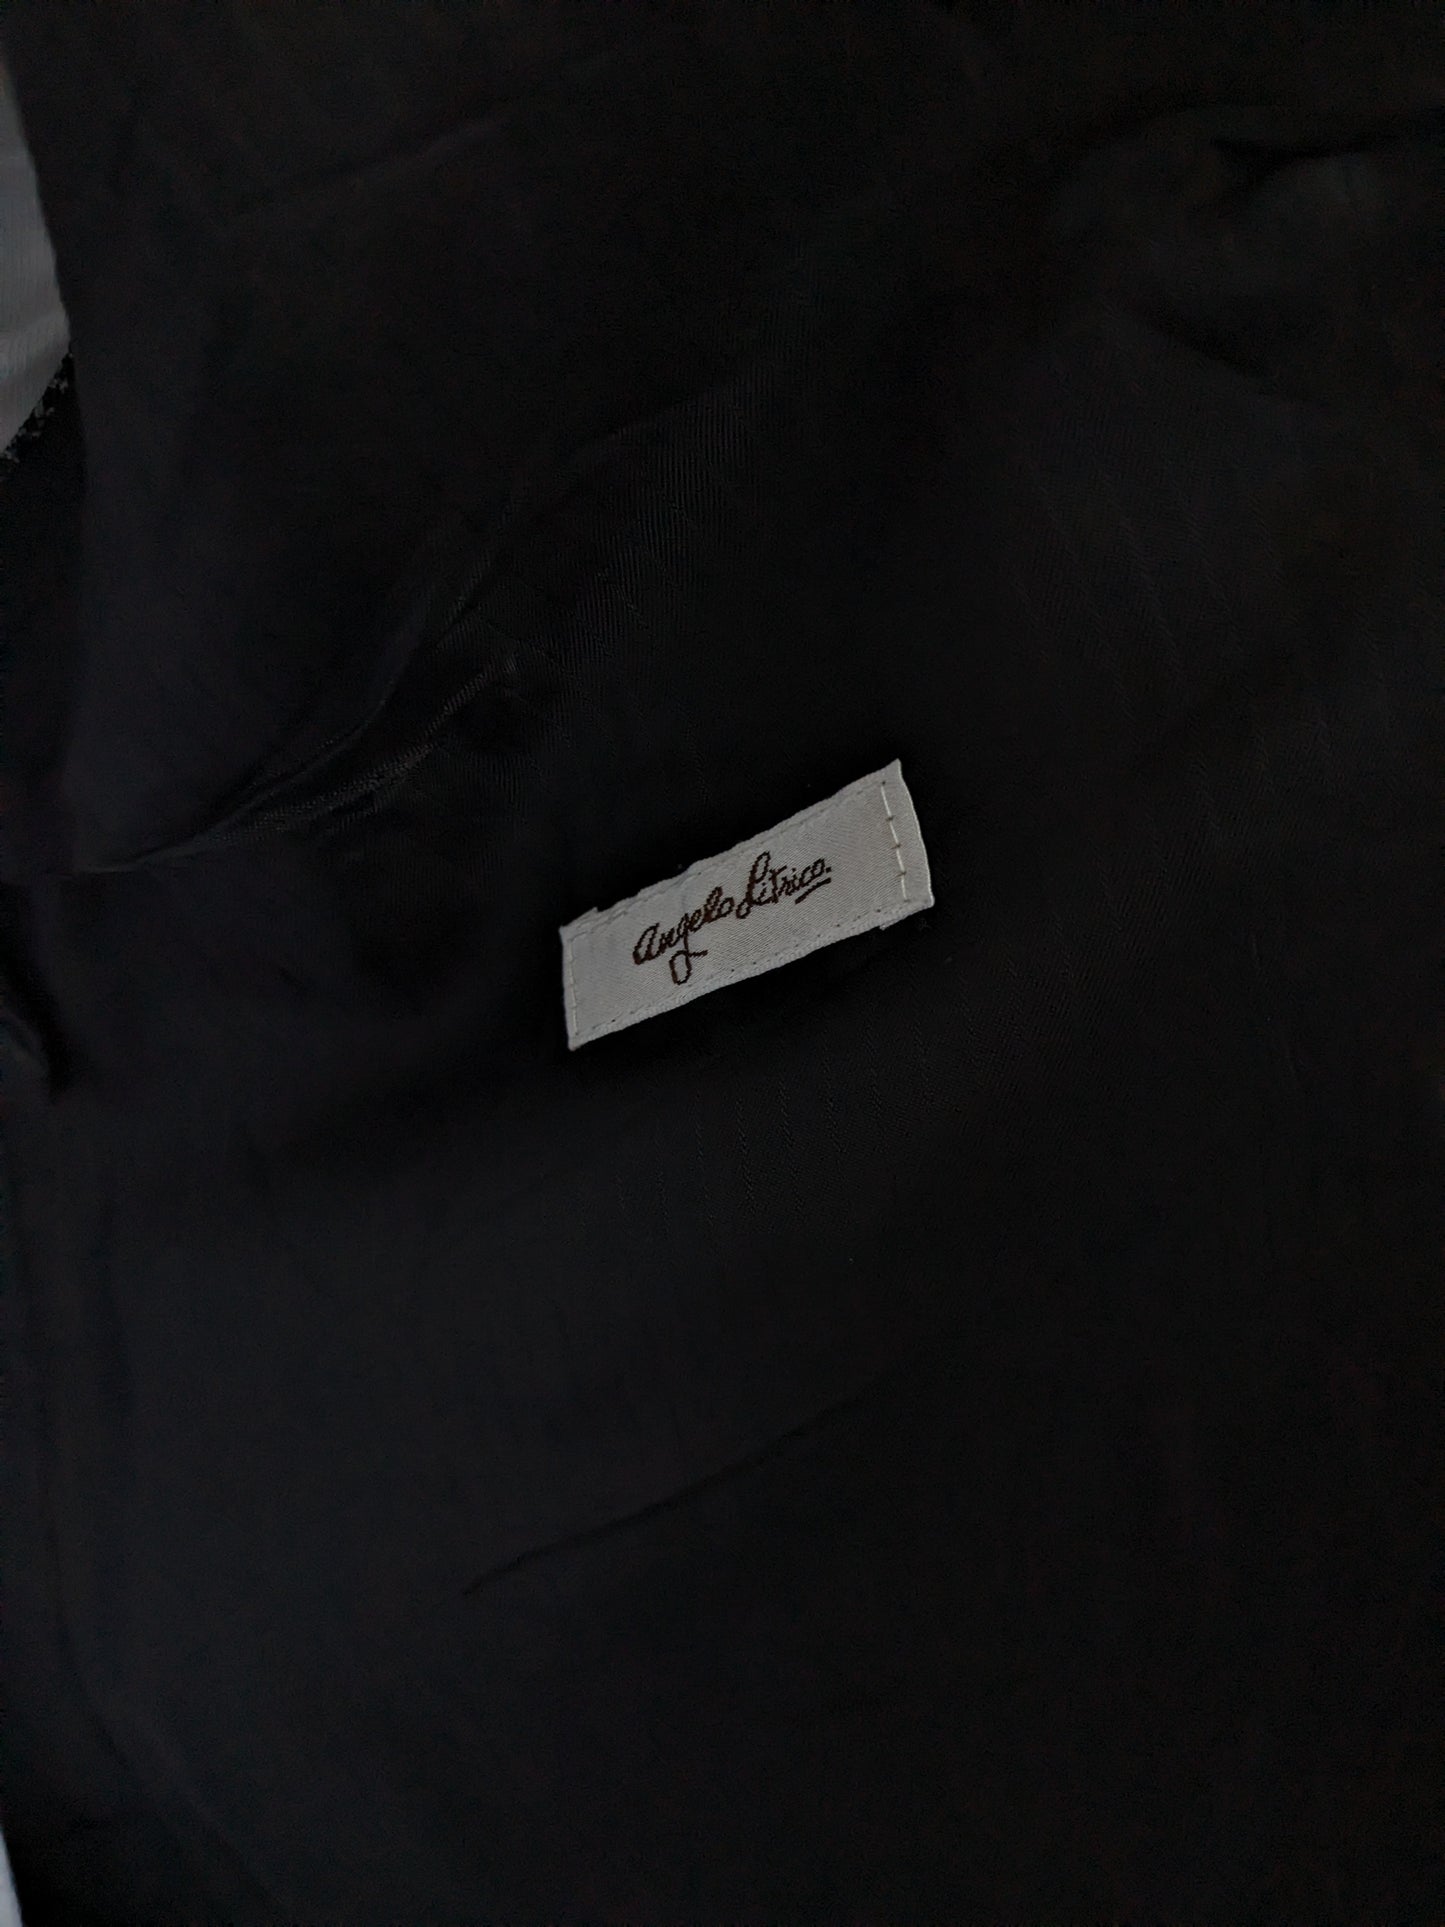 Vintage Angelo Litrico waistcoat. Black gray checkered. Size 48 / M.